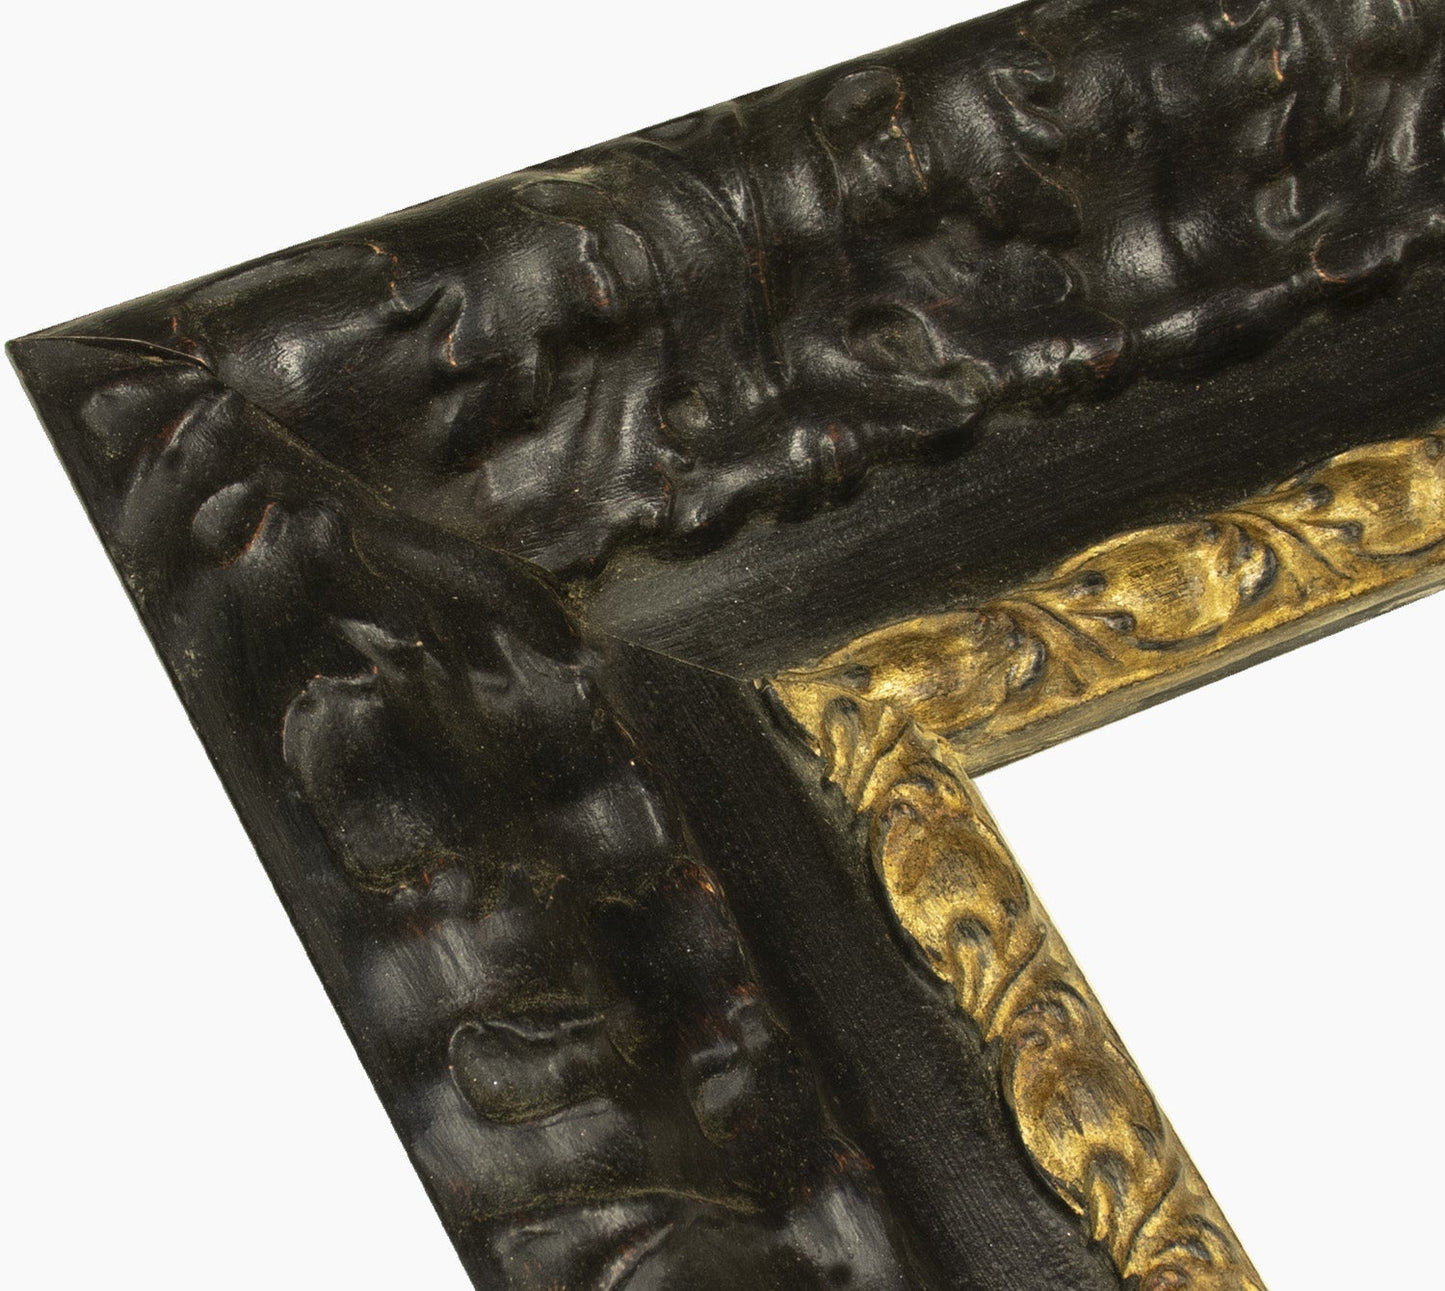 4980.601 cadre en bois noir avec fil d'or mesure de profil 100x60 mm Lombarda cornici S.n.c.